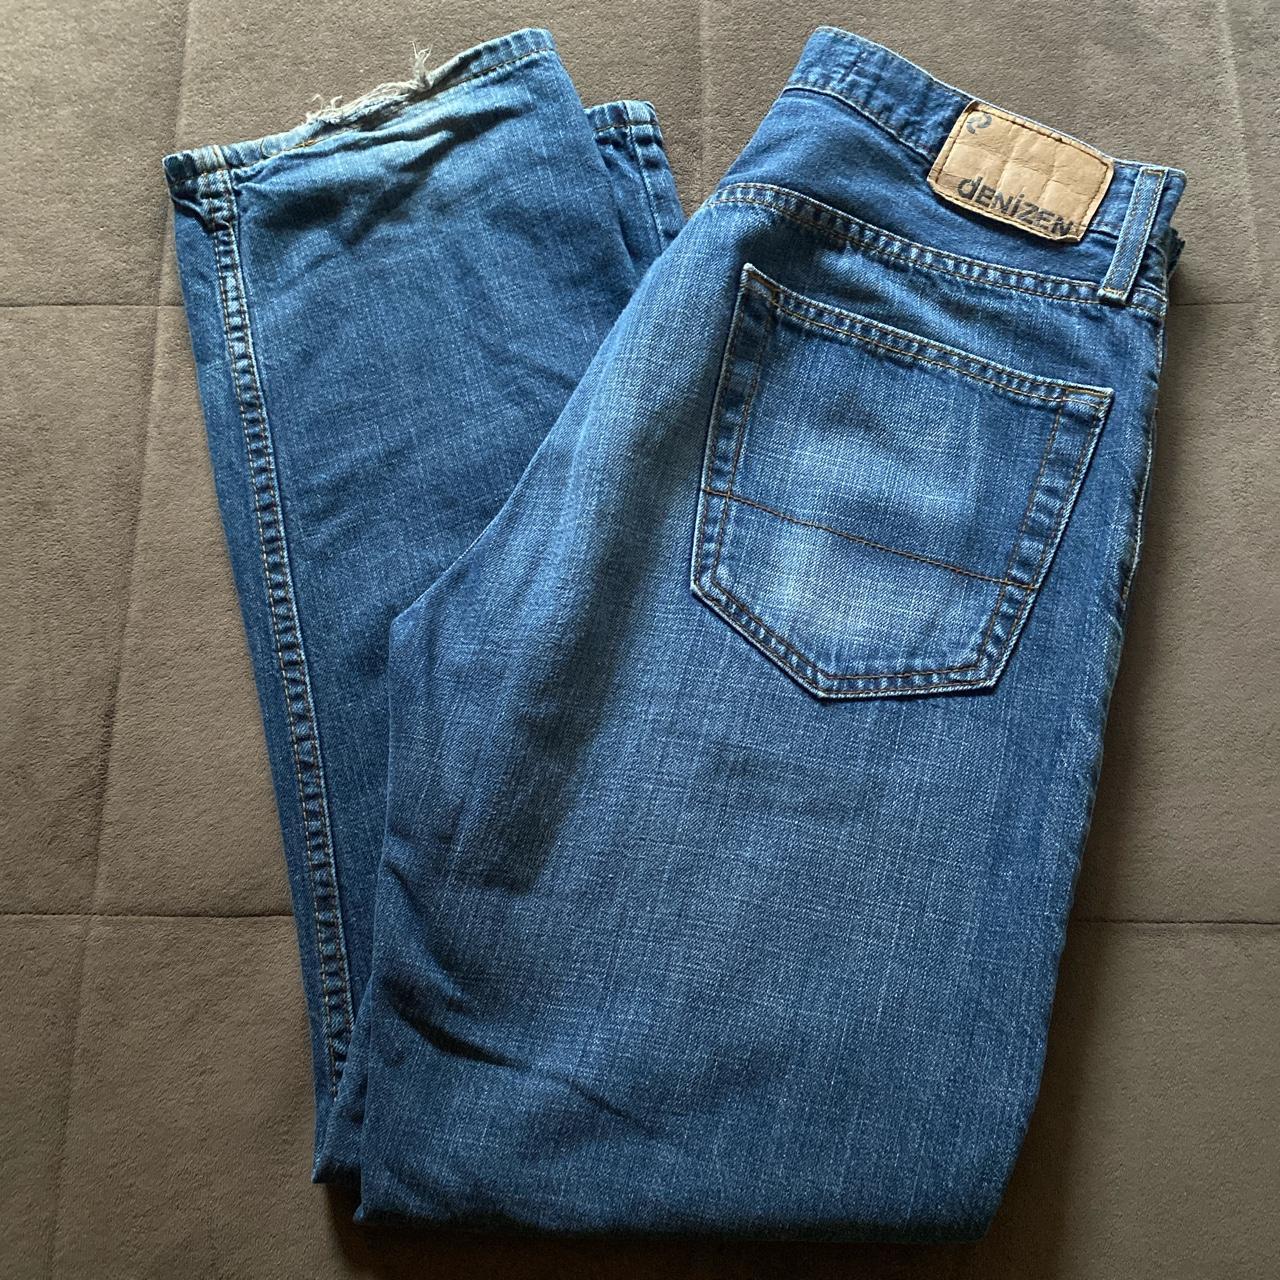 Denim Levi’s Jeans -Good Condition (distressing on... - Depop